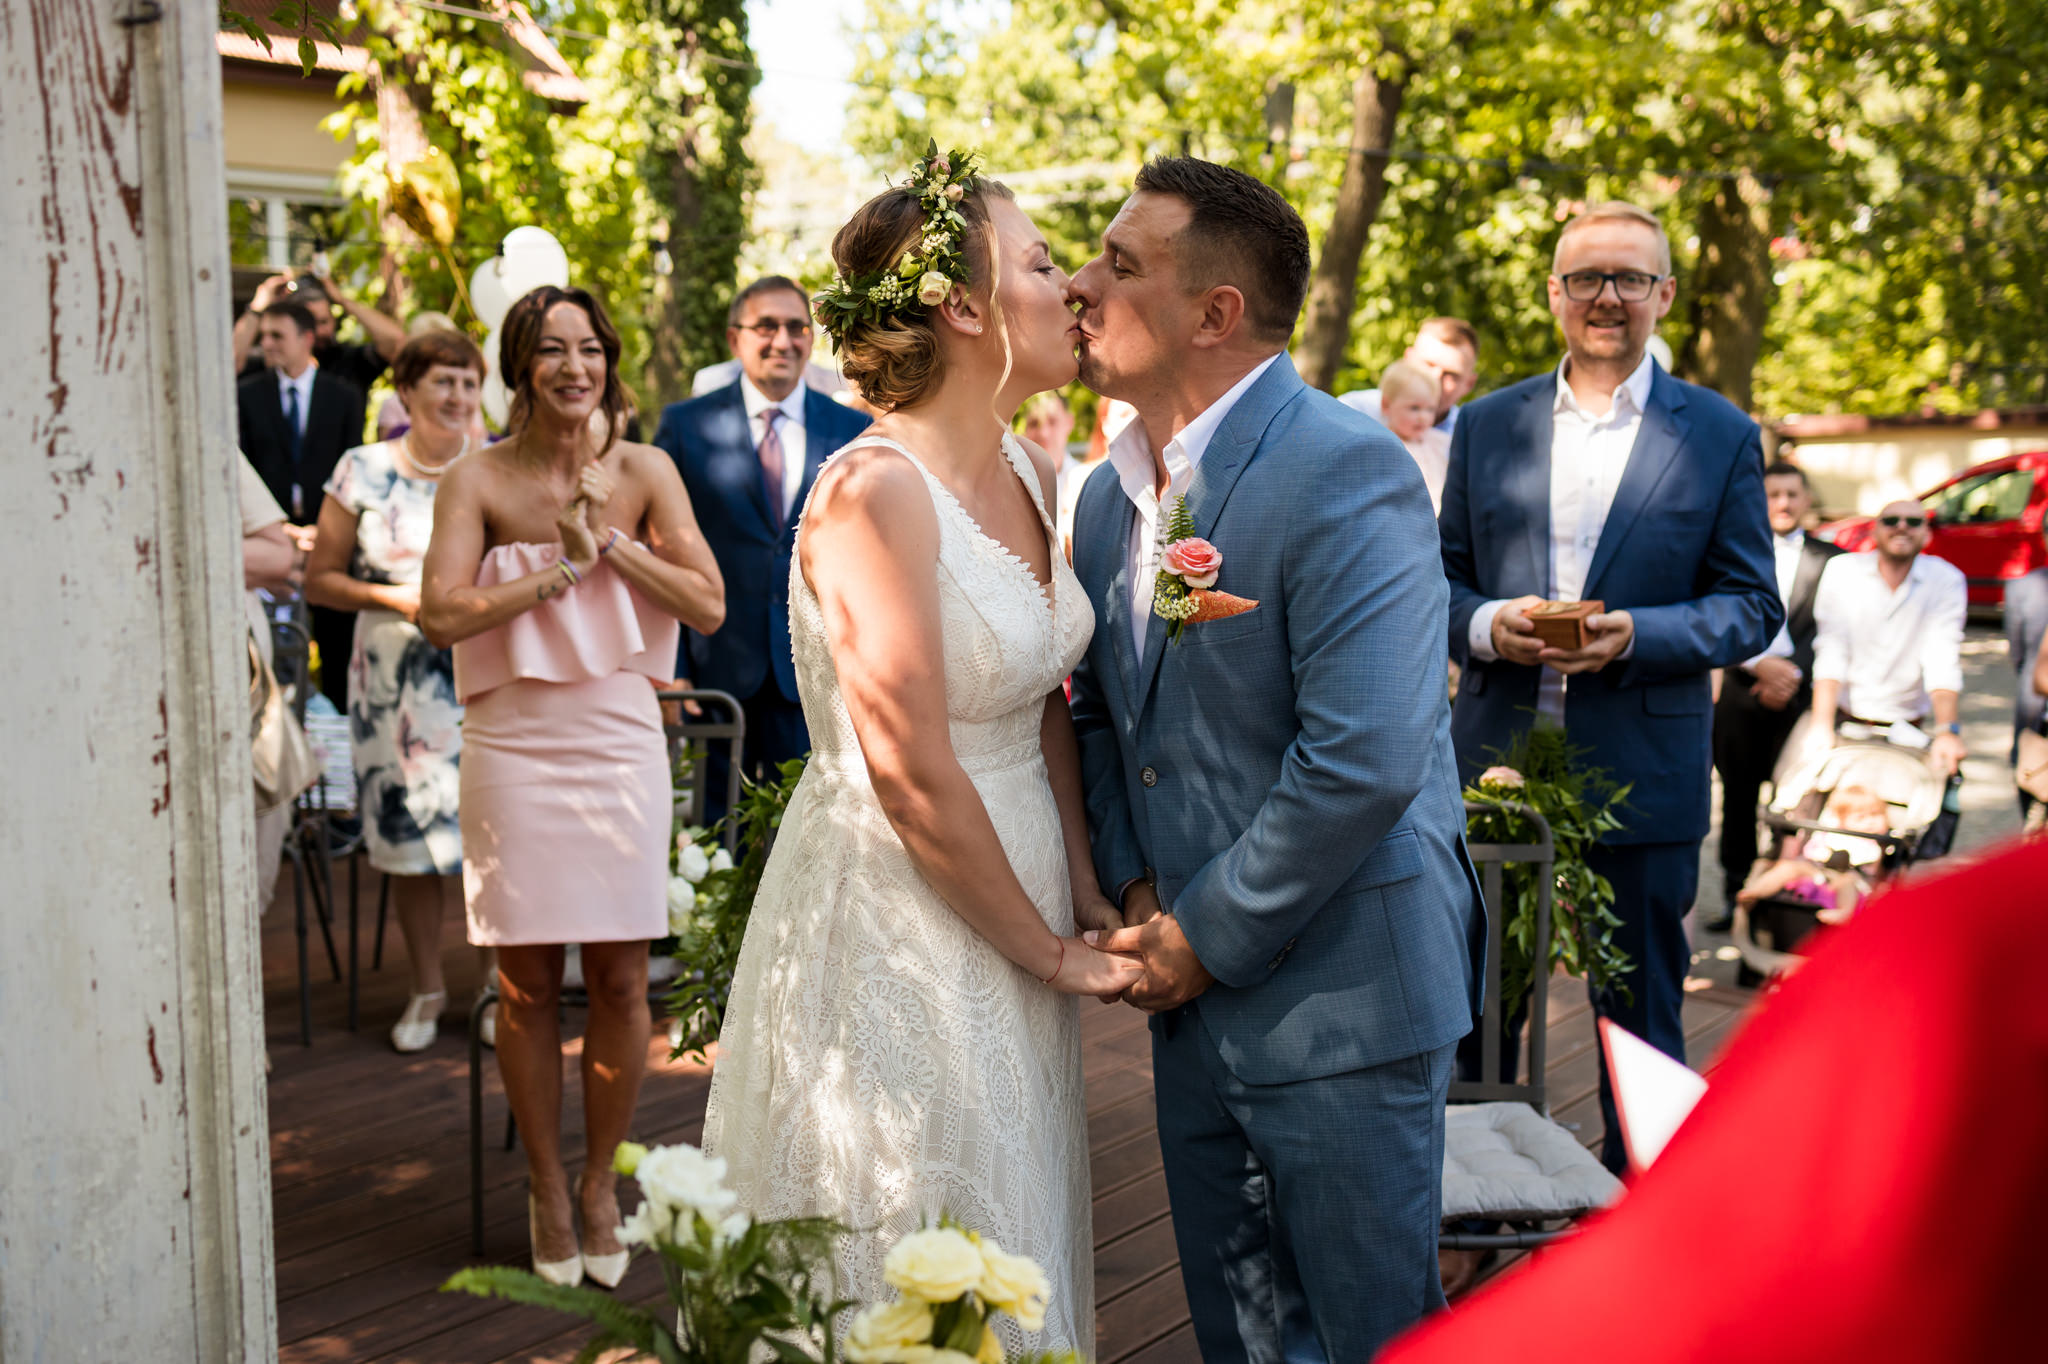 pocałunek pary młodej na ślubie